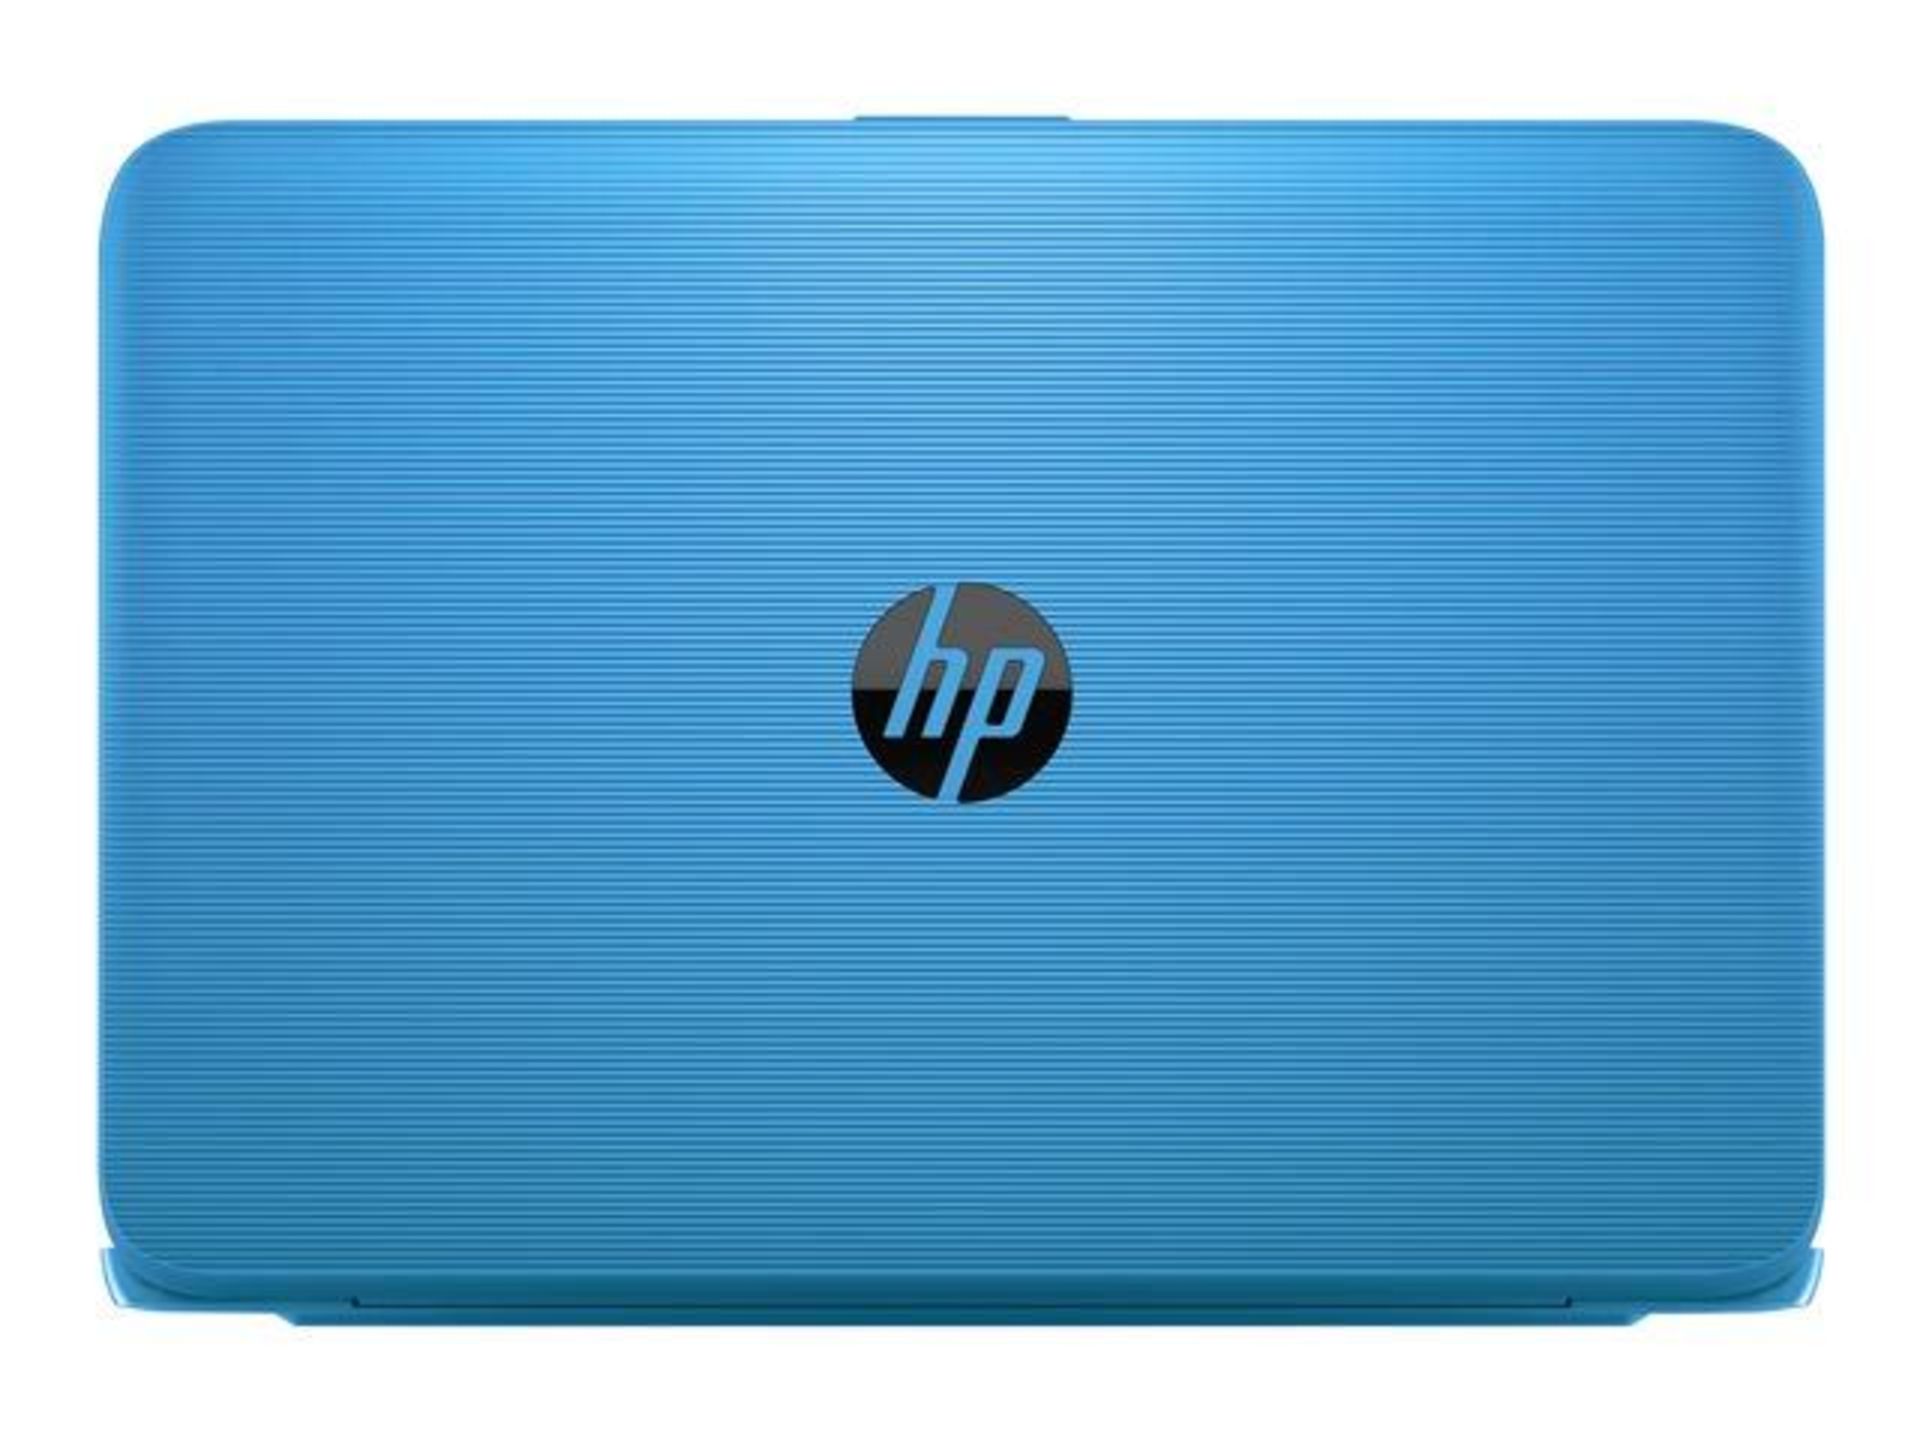 V Grade A HP Stream 11.6 Inch Celeron 2GB 32GB Cloudbook - Argos Price £199.95 - In Aqua Blue - - Image 2 of 2